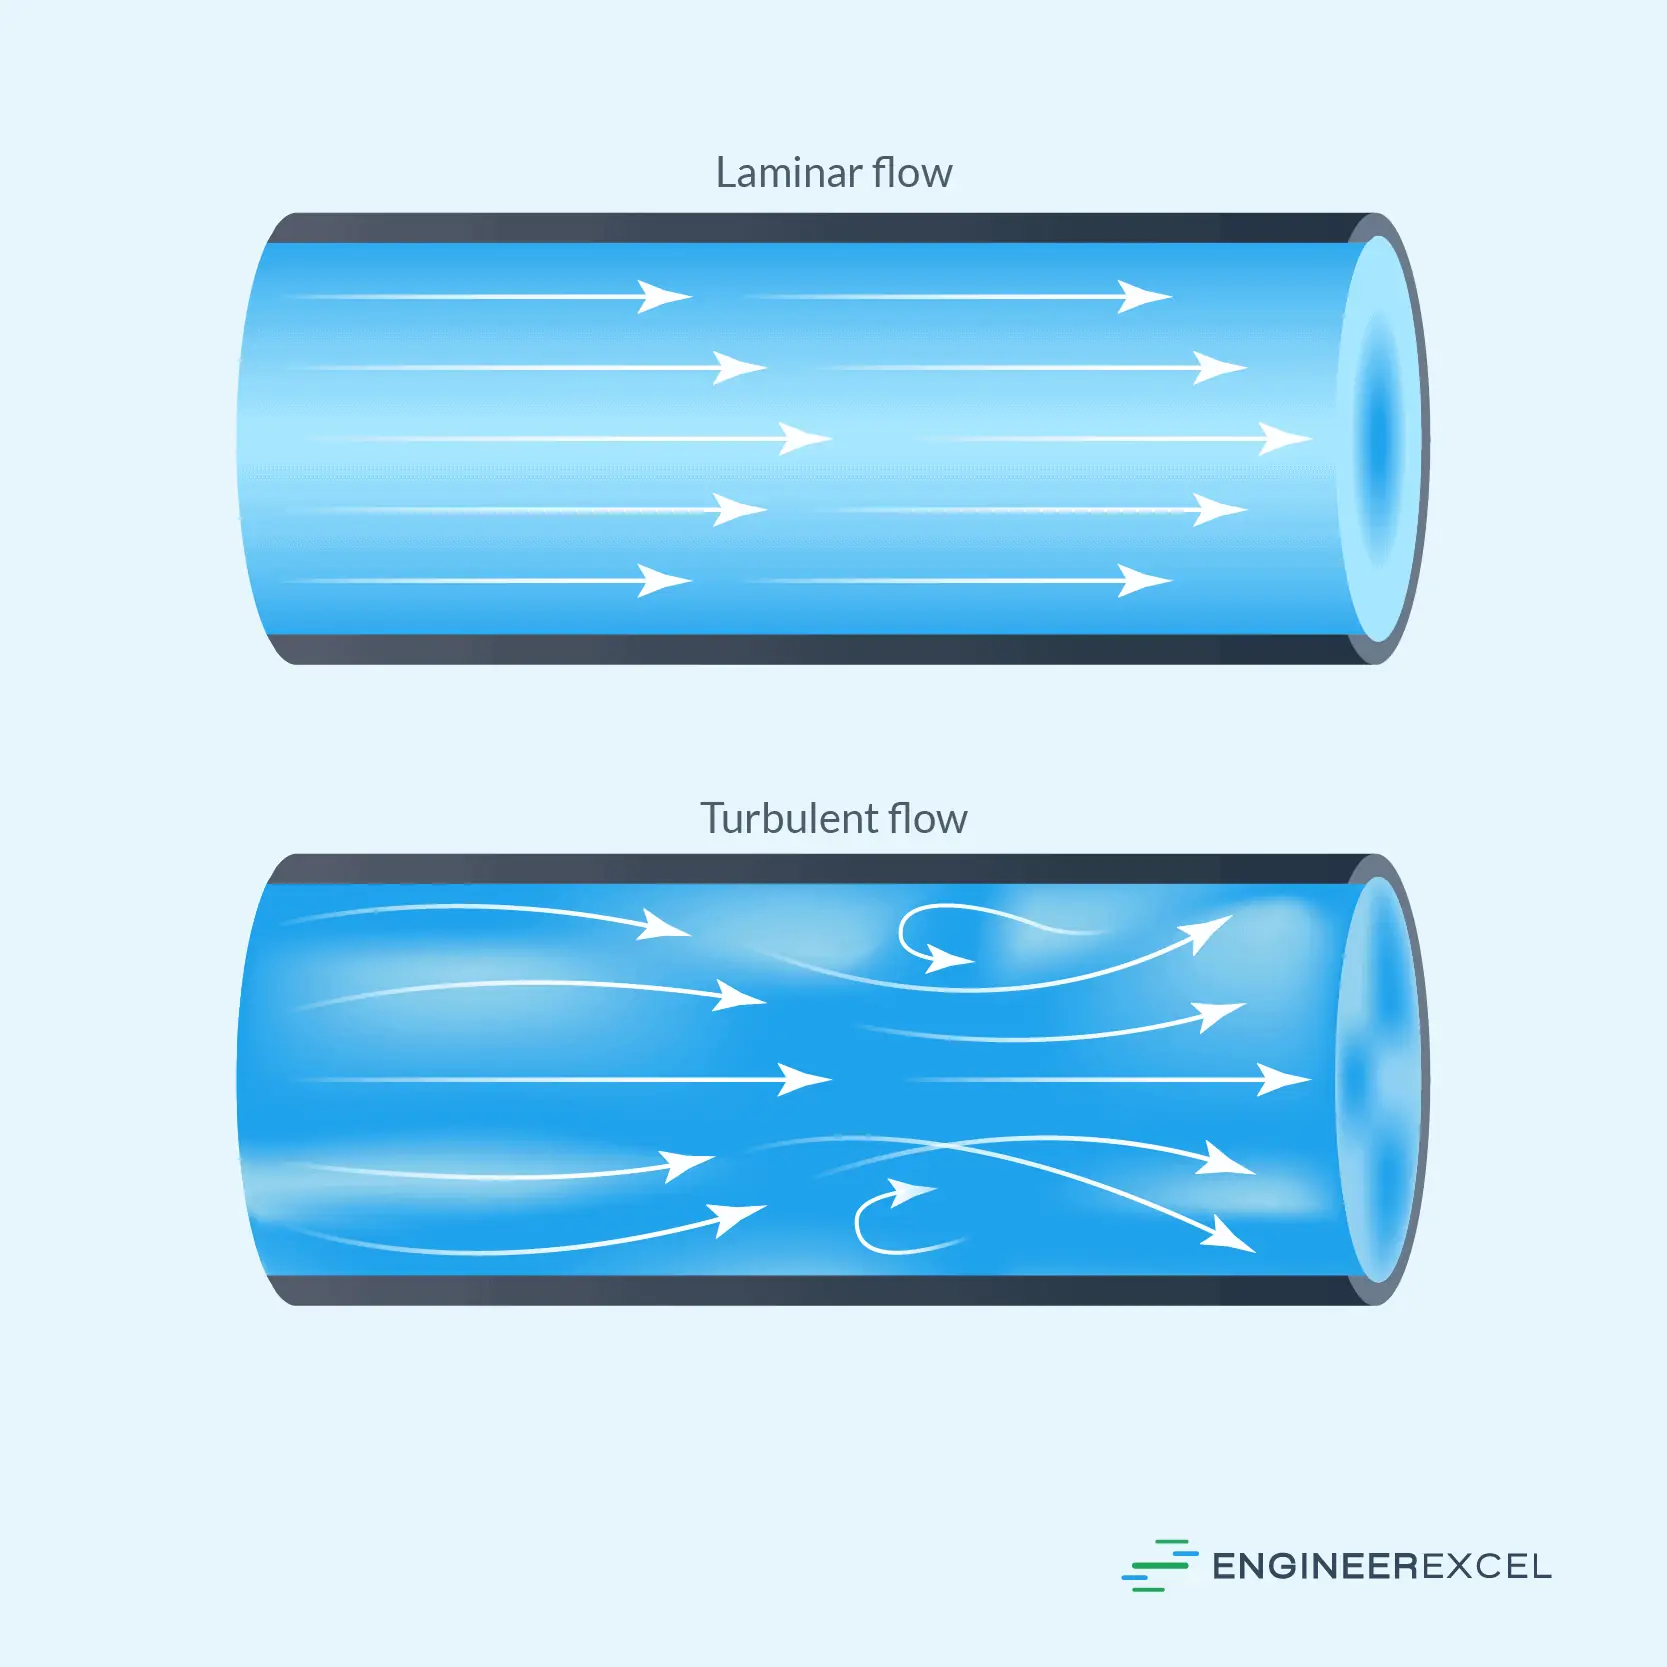 laminar flow versus turbulent flow